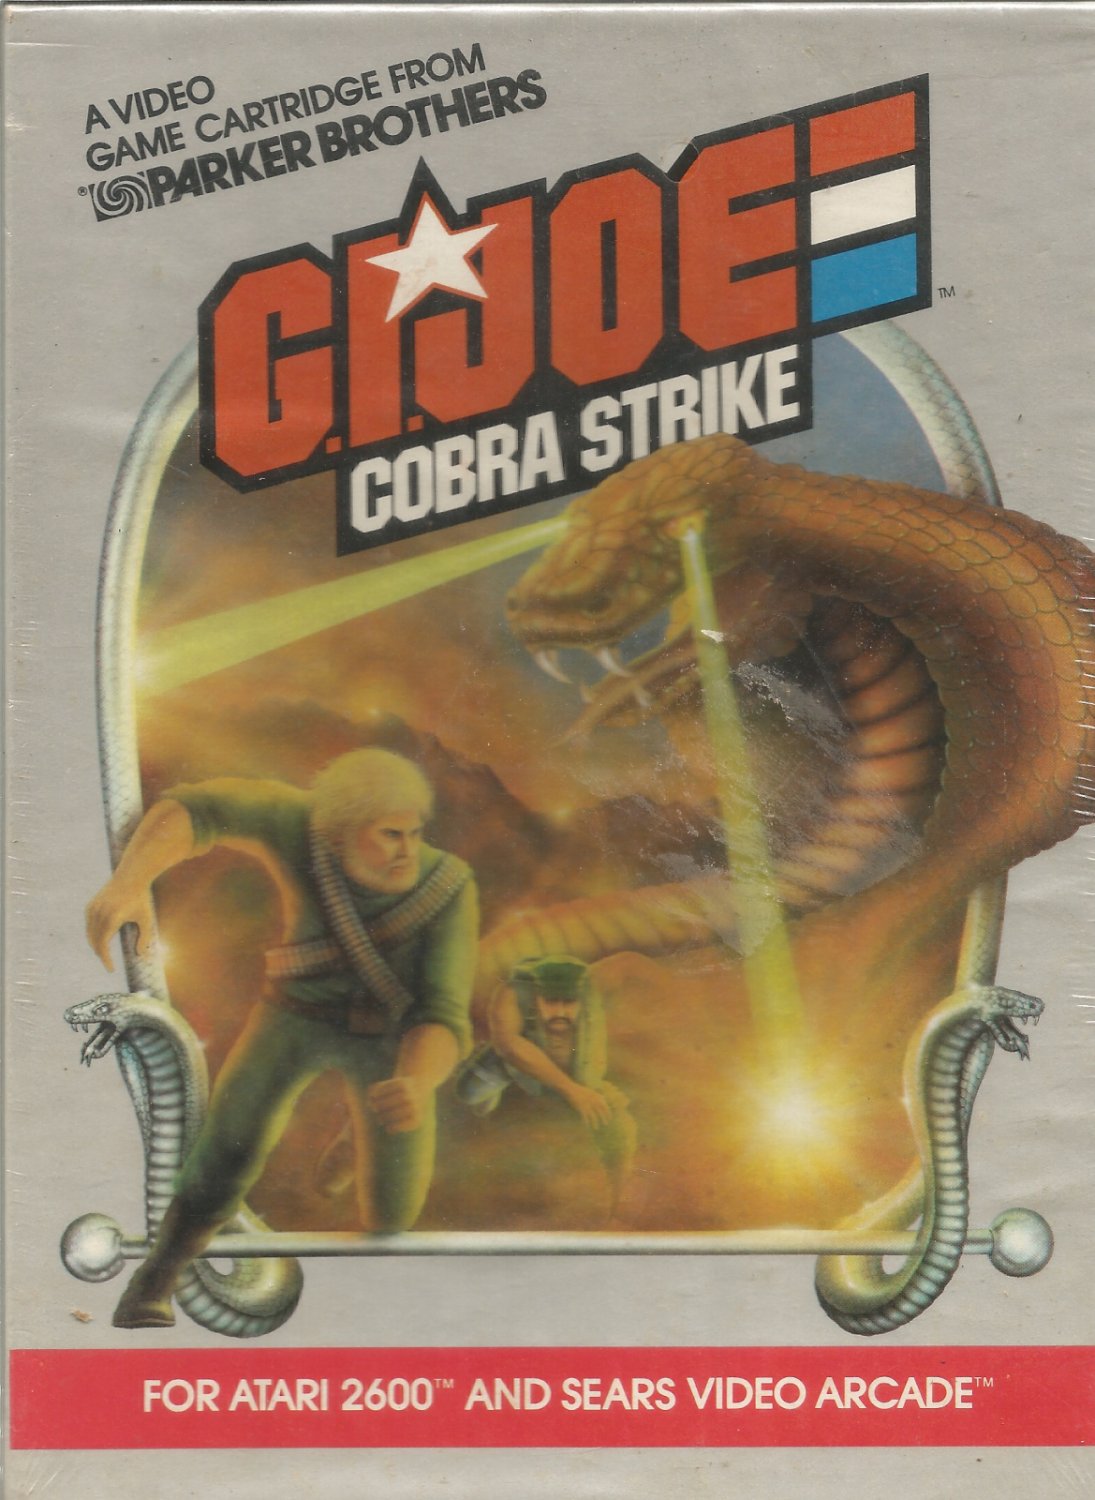 GI JOE Cobra Strike game cartridge for Atari 2600 and Sears Video Arcade